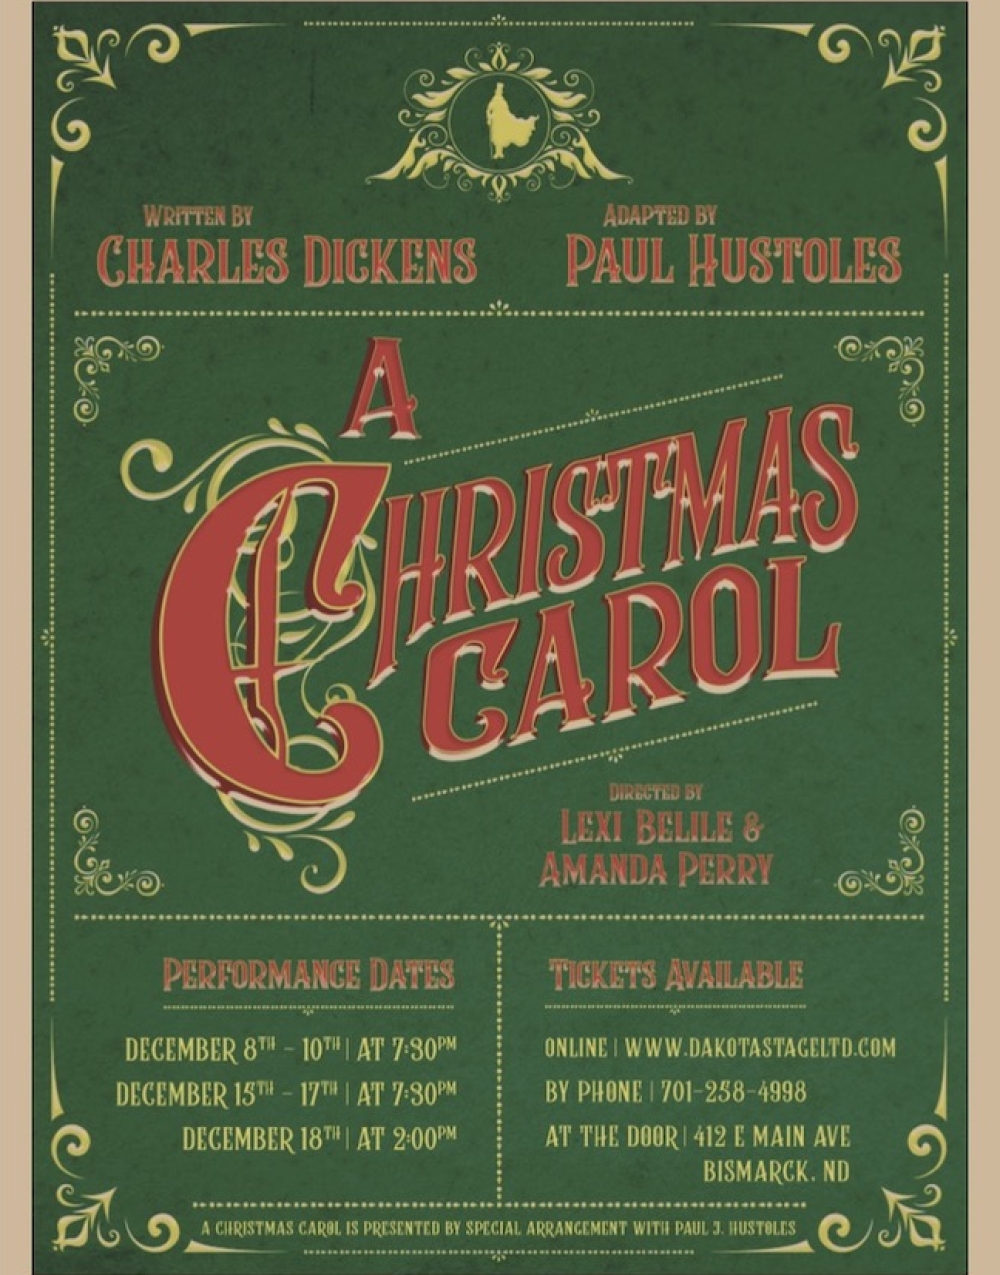 A Christmas Carol at Dakota Stage, Ltd.